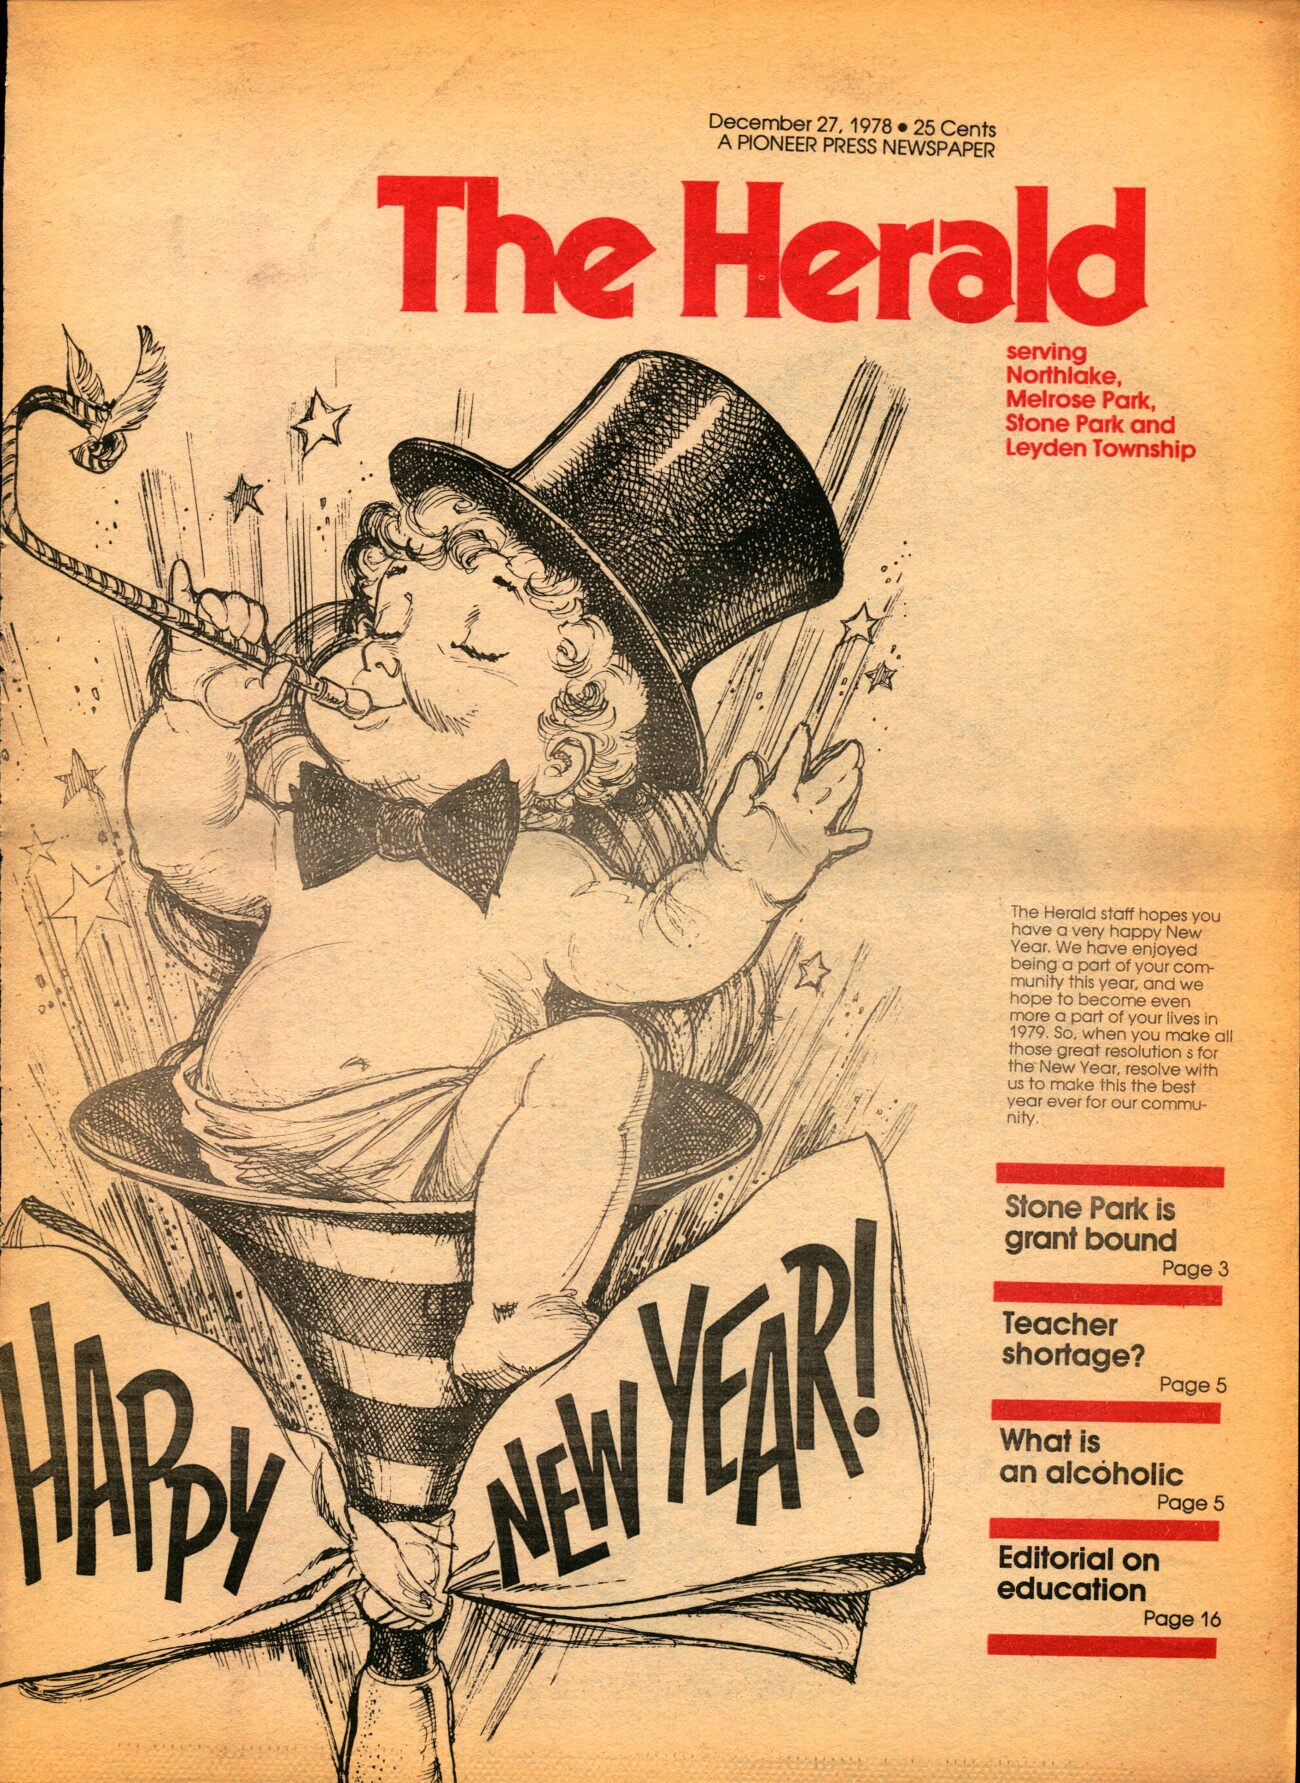 The Herald – 19781227